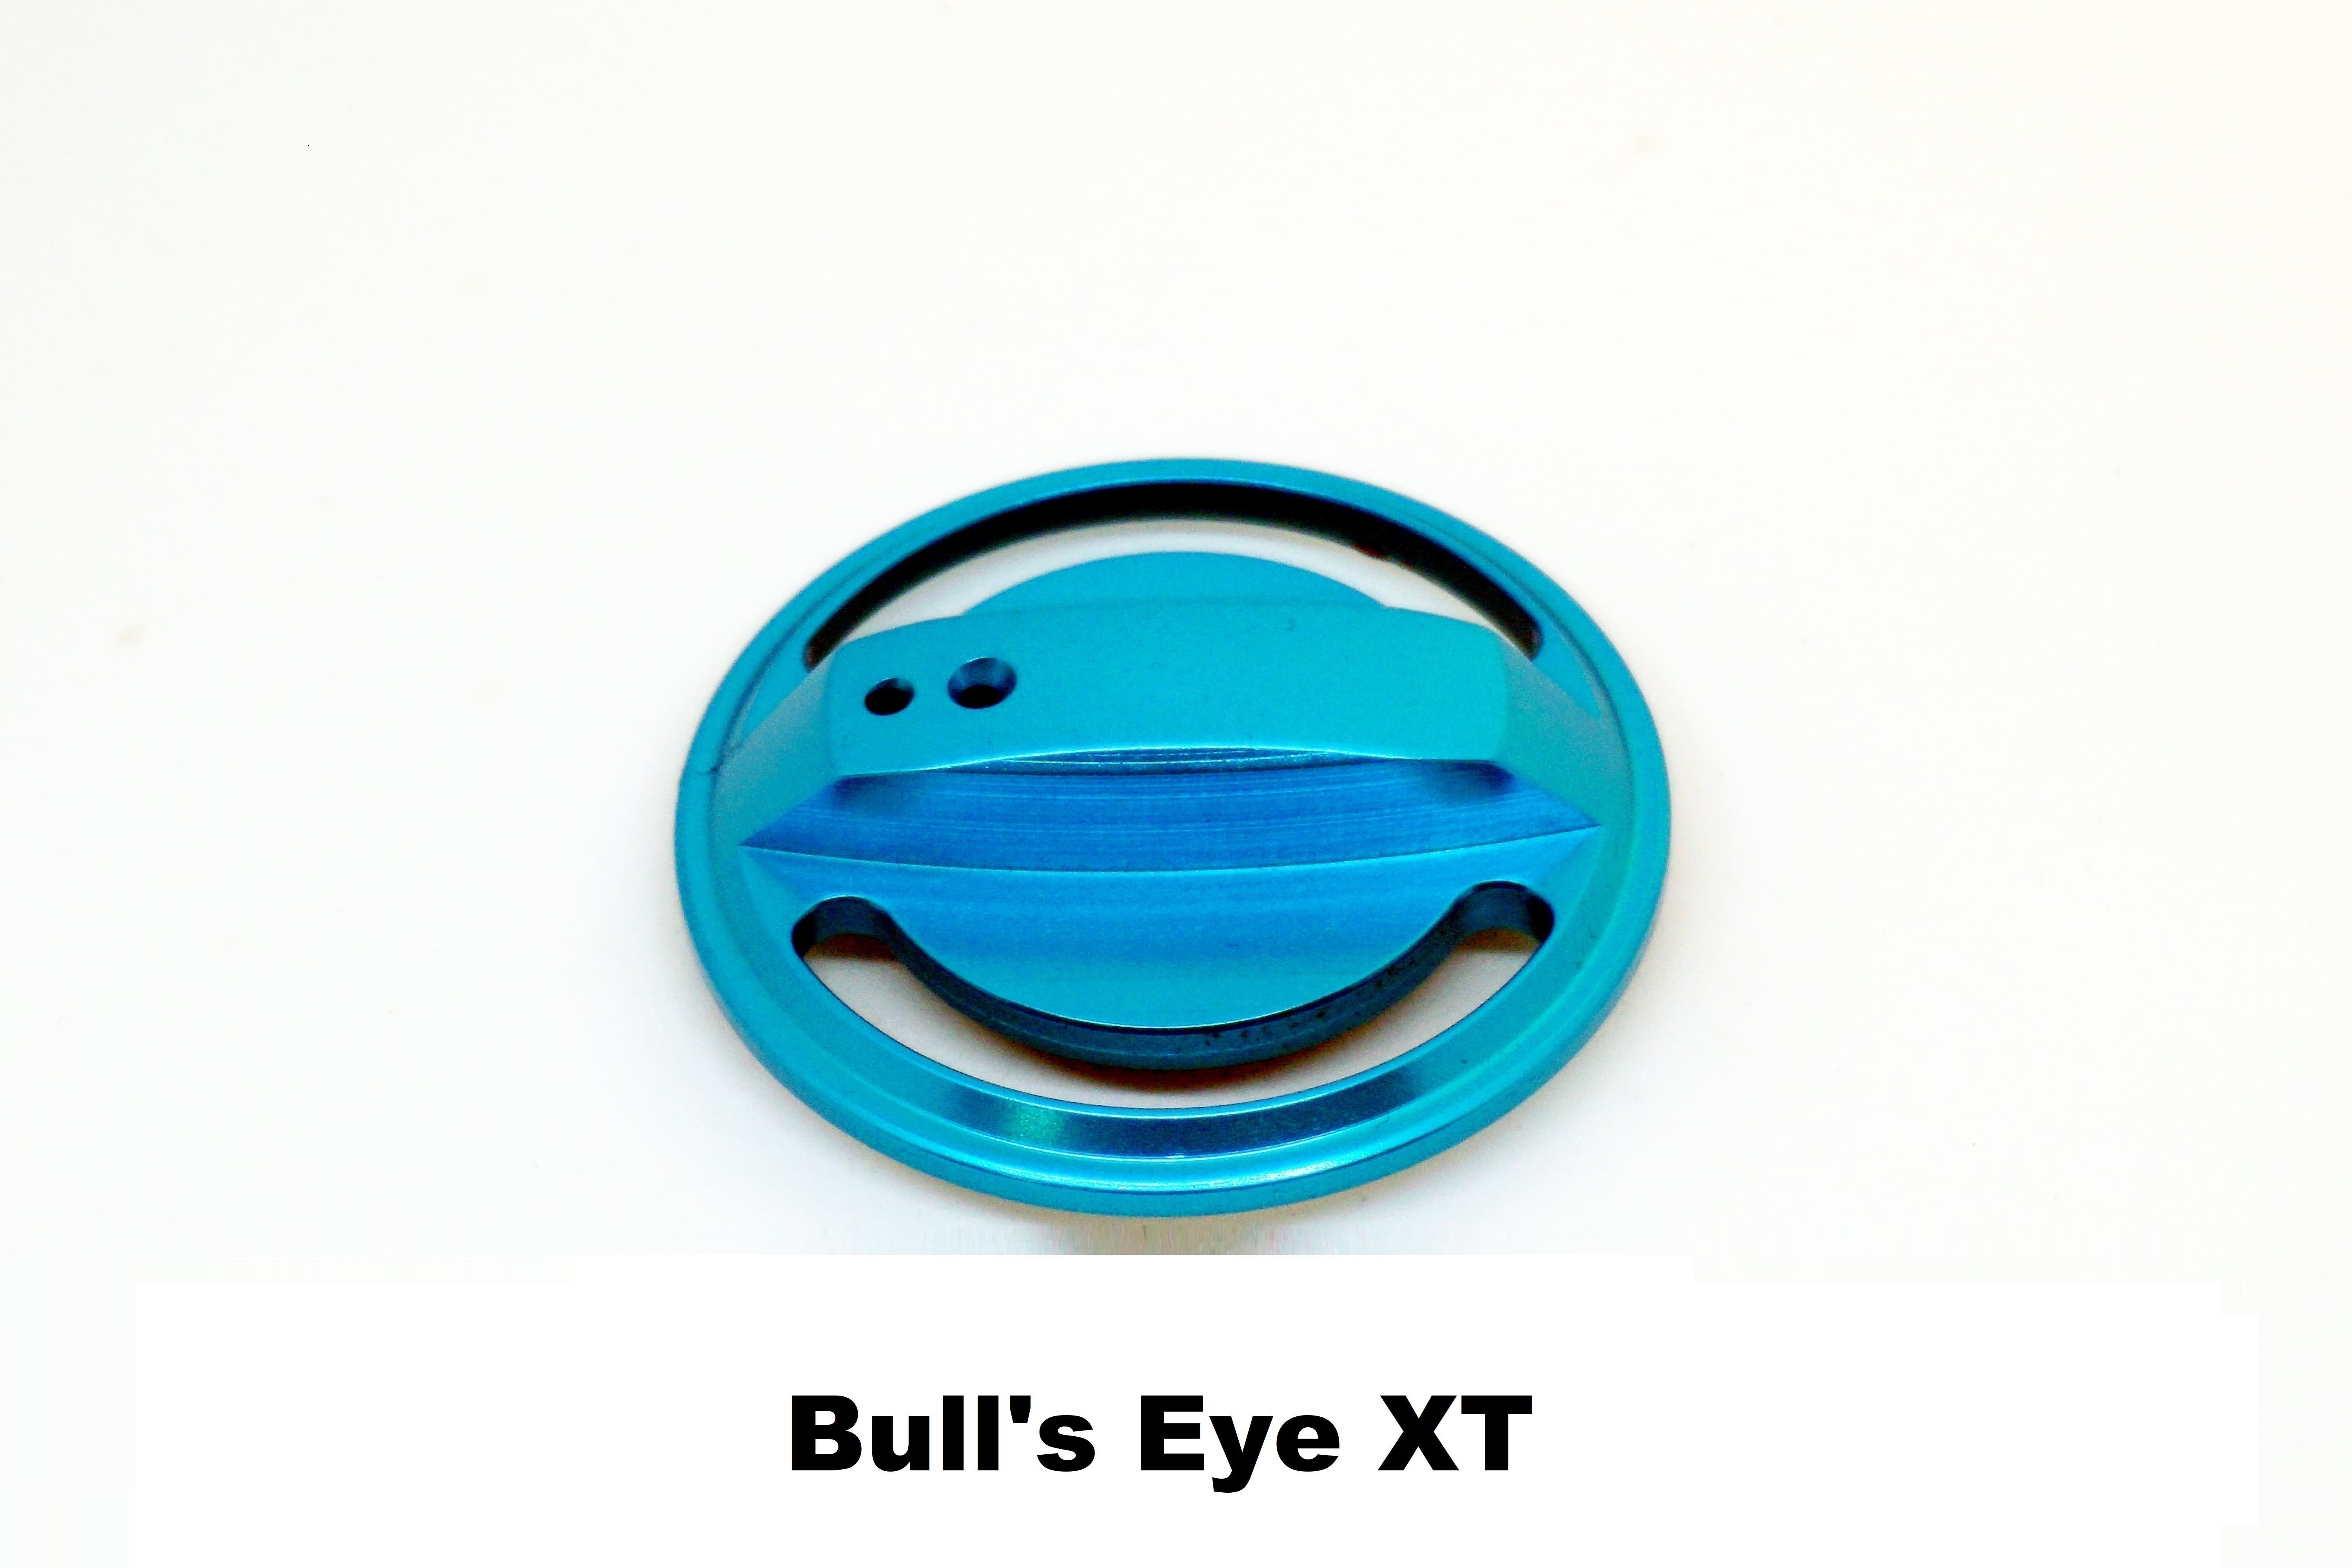 Spina del Freno Bull's Eye XT